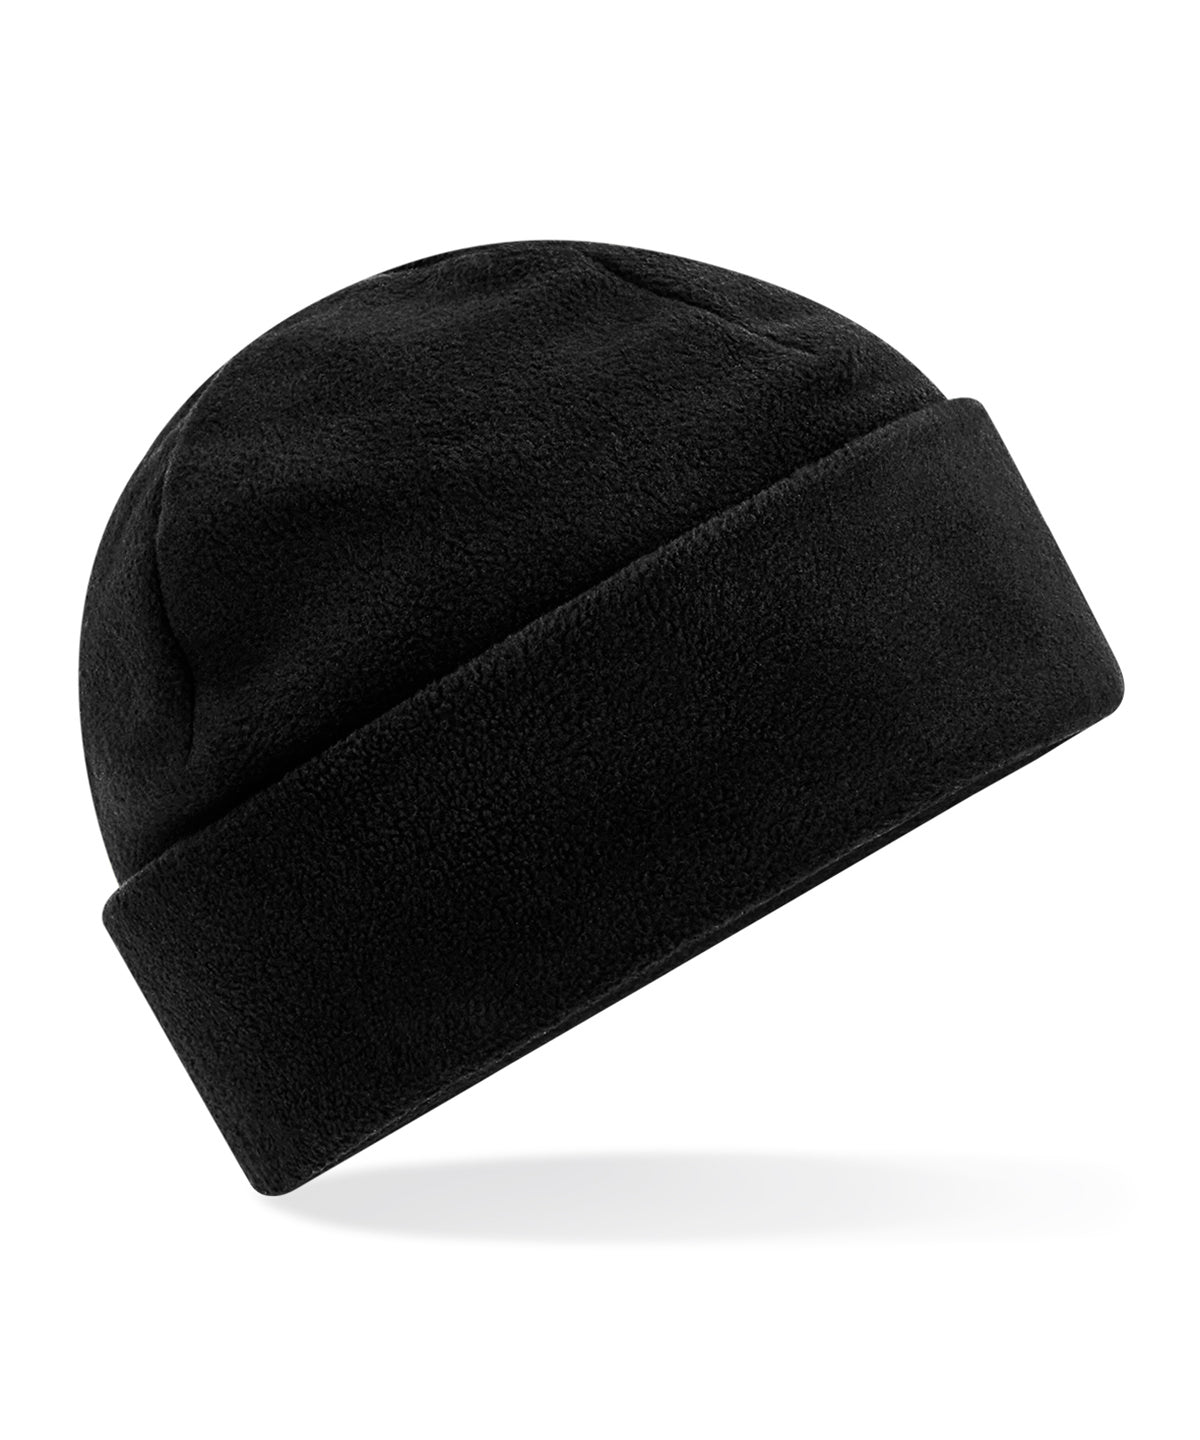 Personalised Hats - Black Beechfield Recycled fleece cuffed beanie